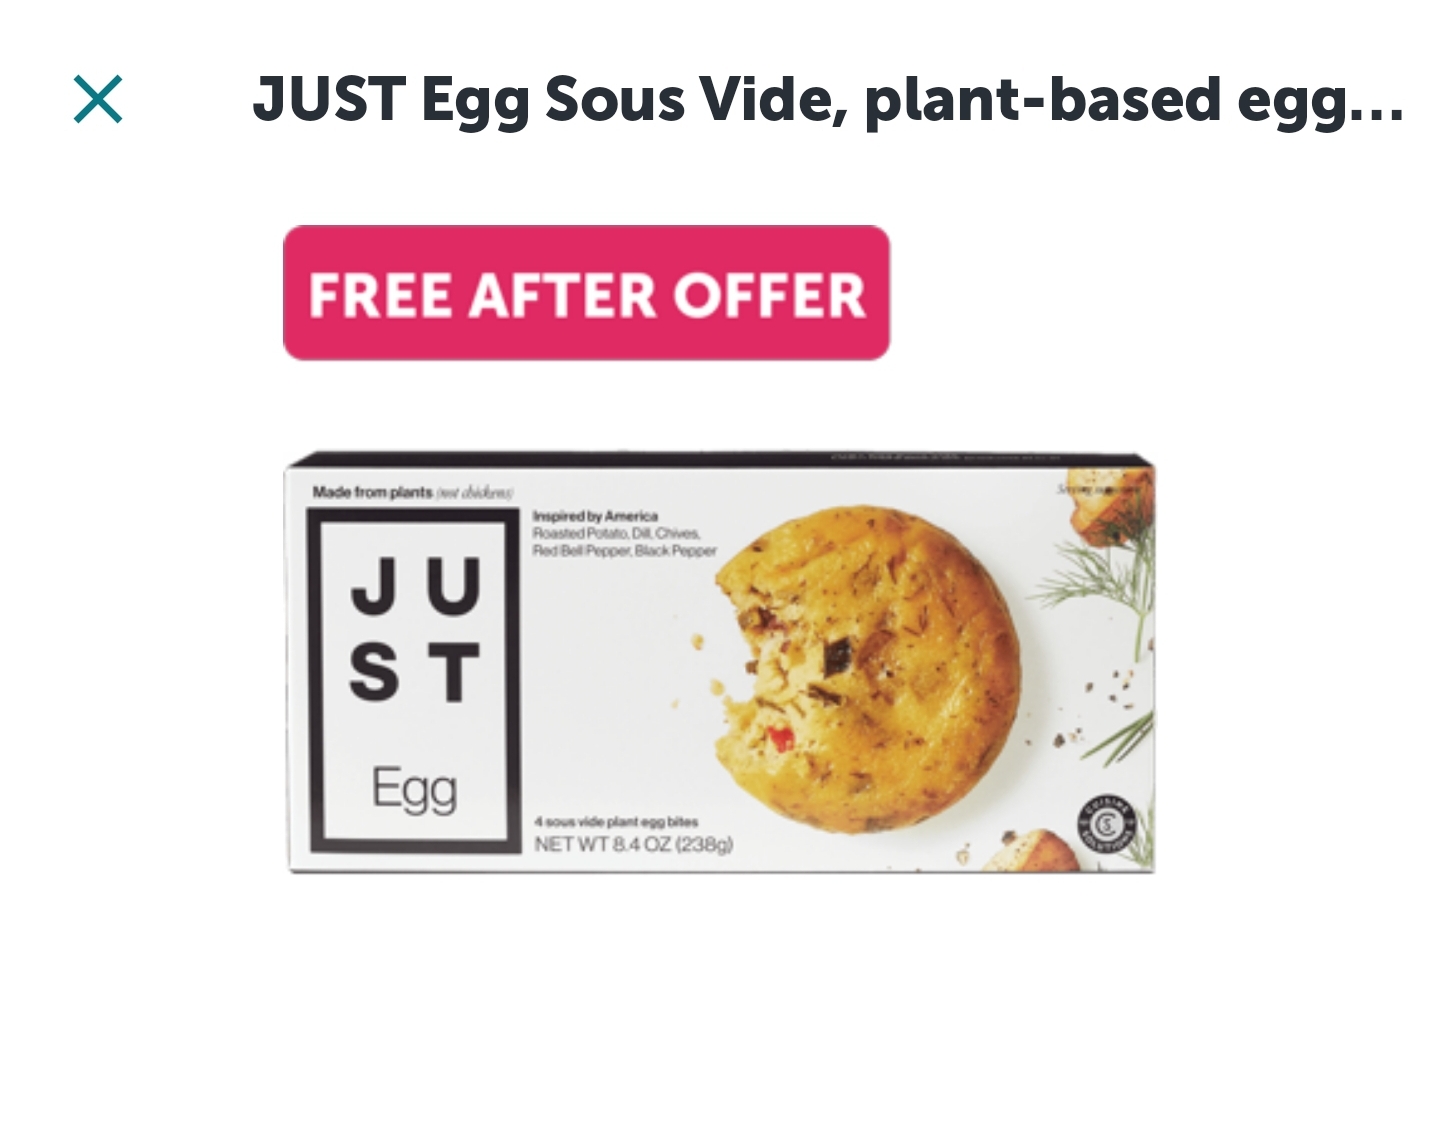 Free JUST Egg Sous Vide at Walmart